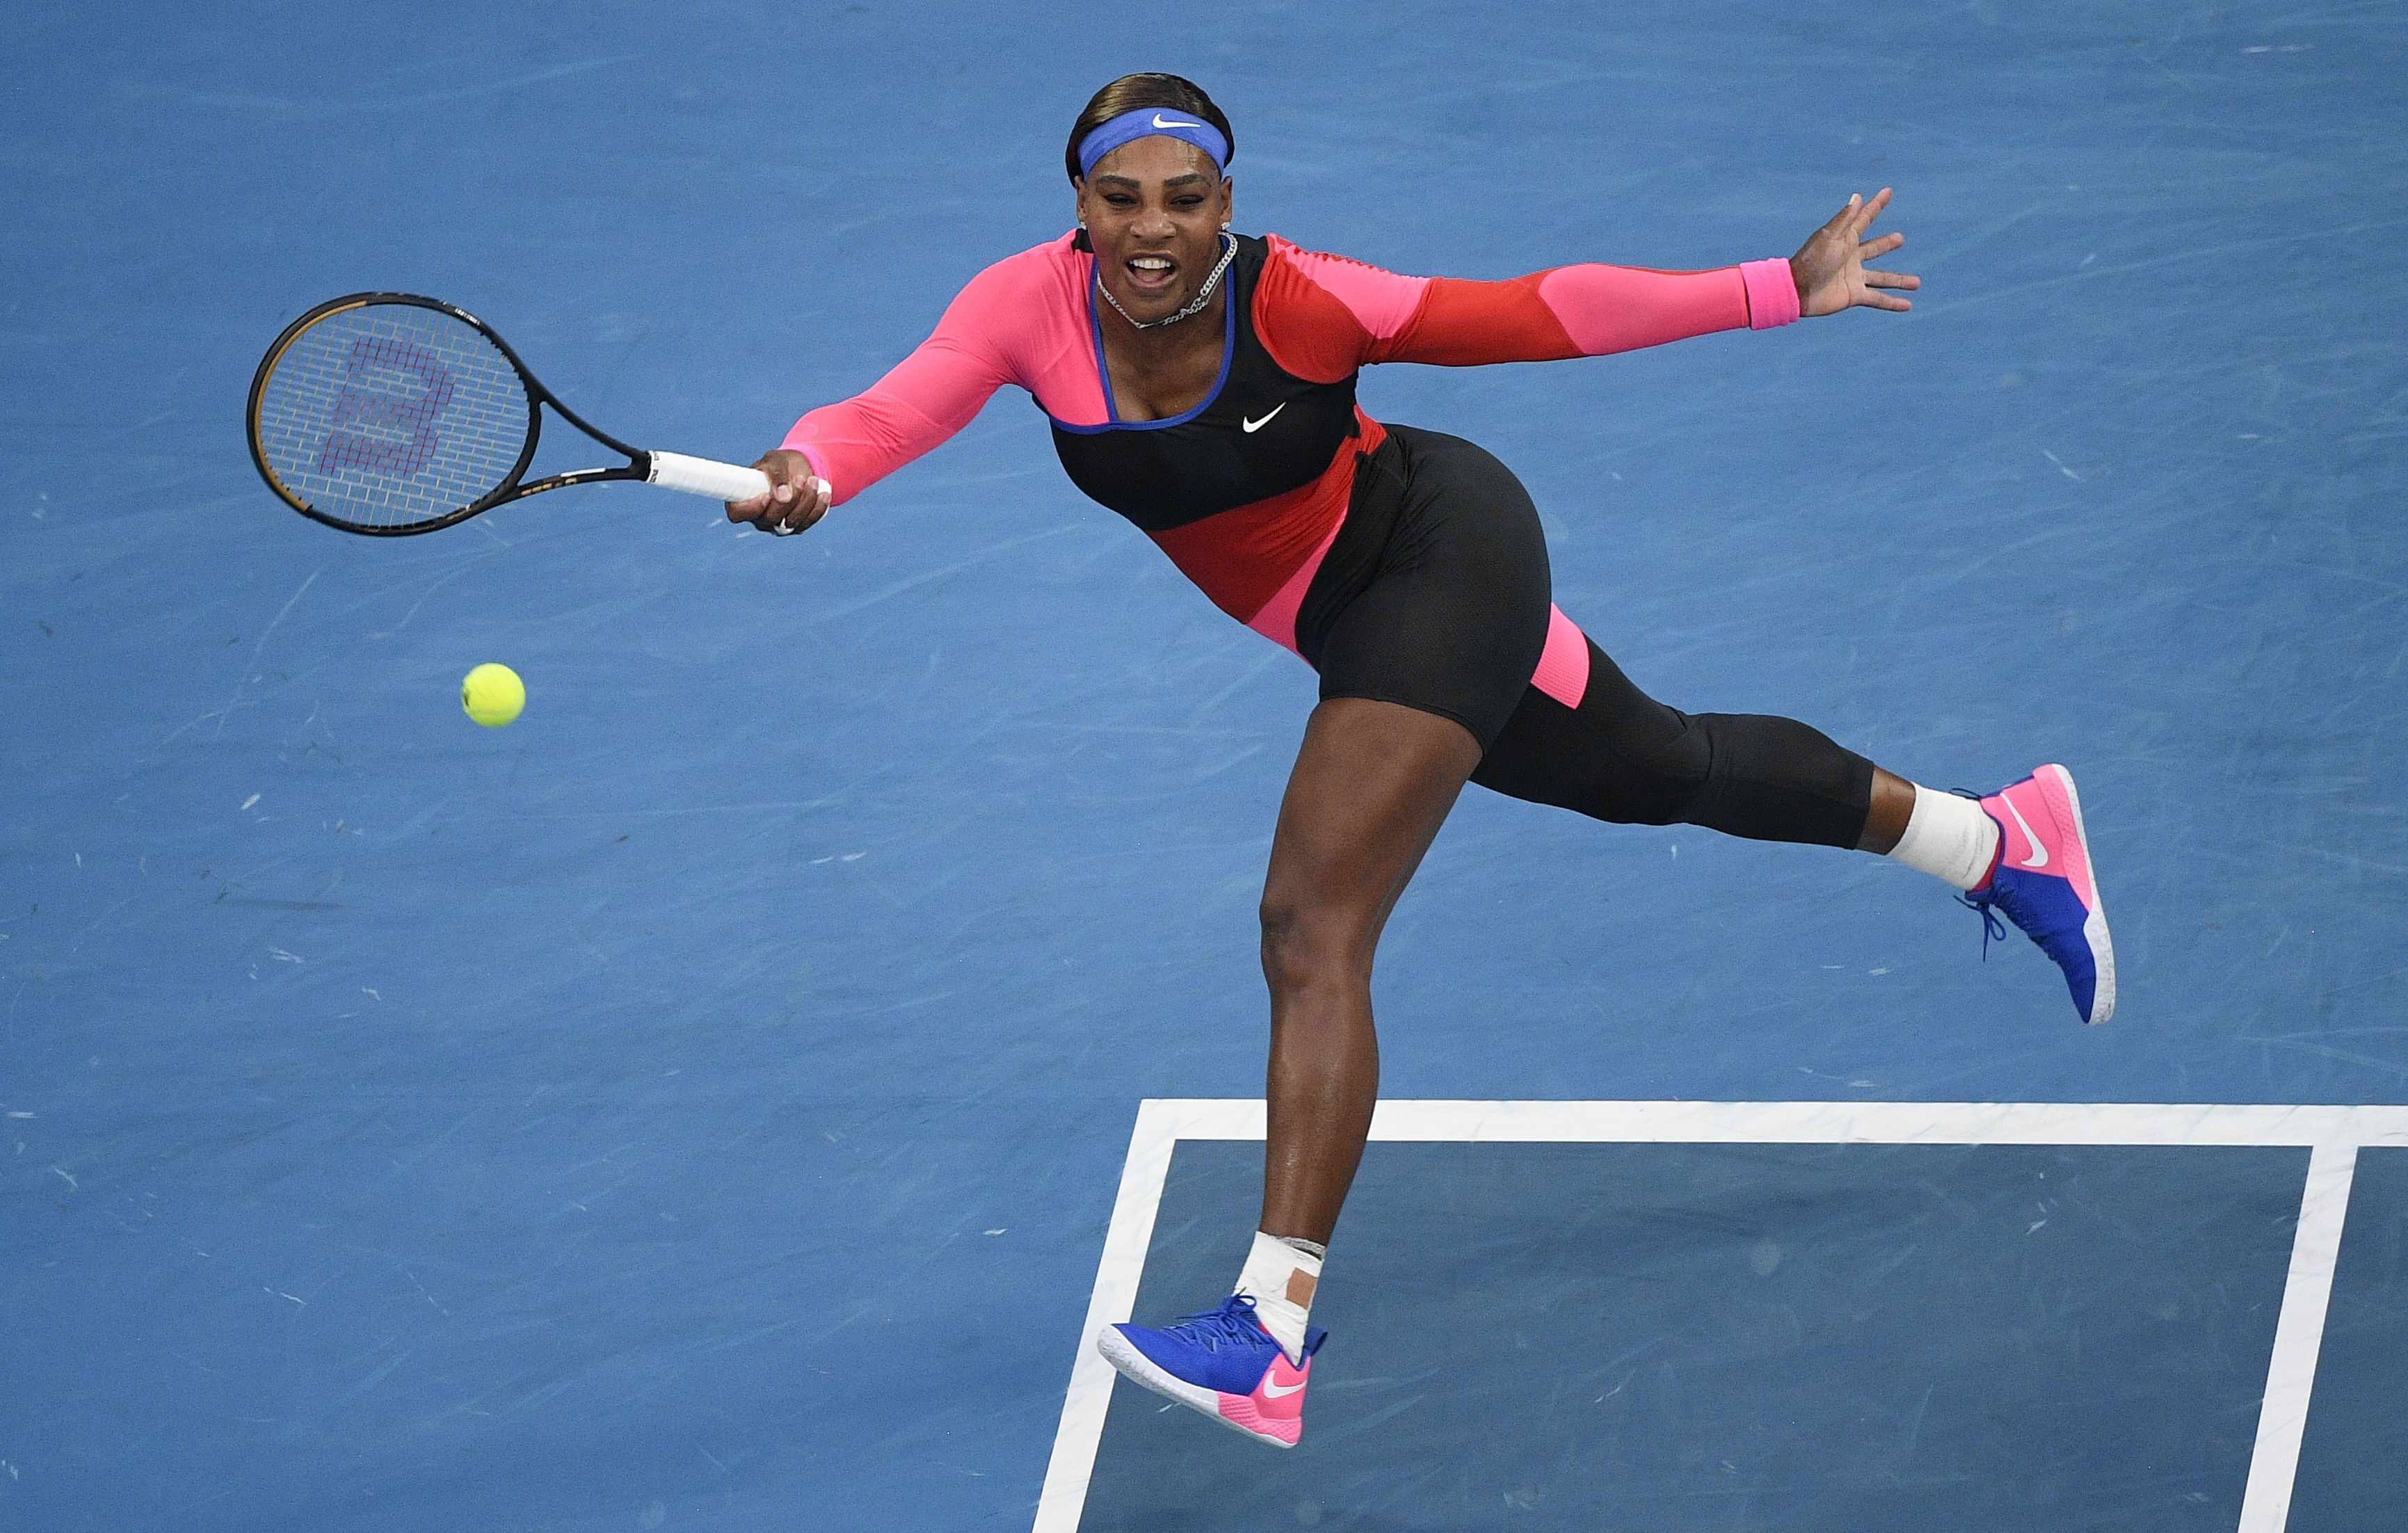 Serena Williams vs. Naomi Osaka FREE LIVE STREAM How to watch Australian Open semifinal online | Time, USA TV, channel - nj.com